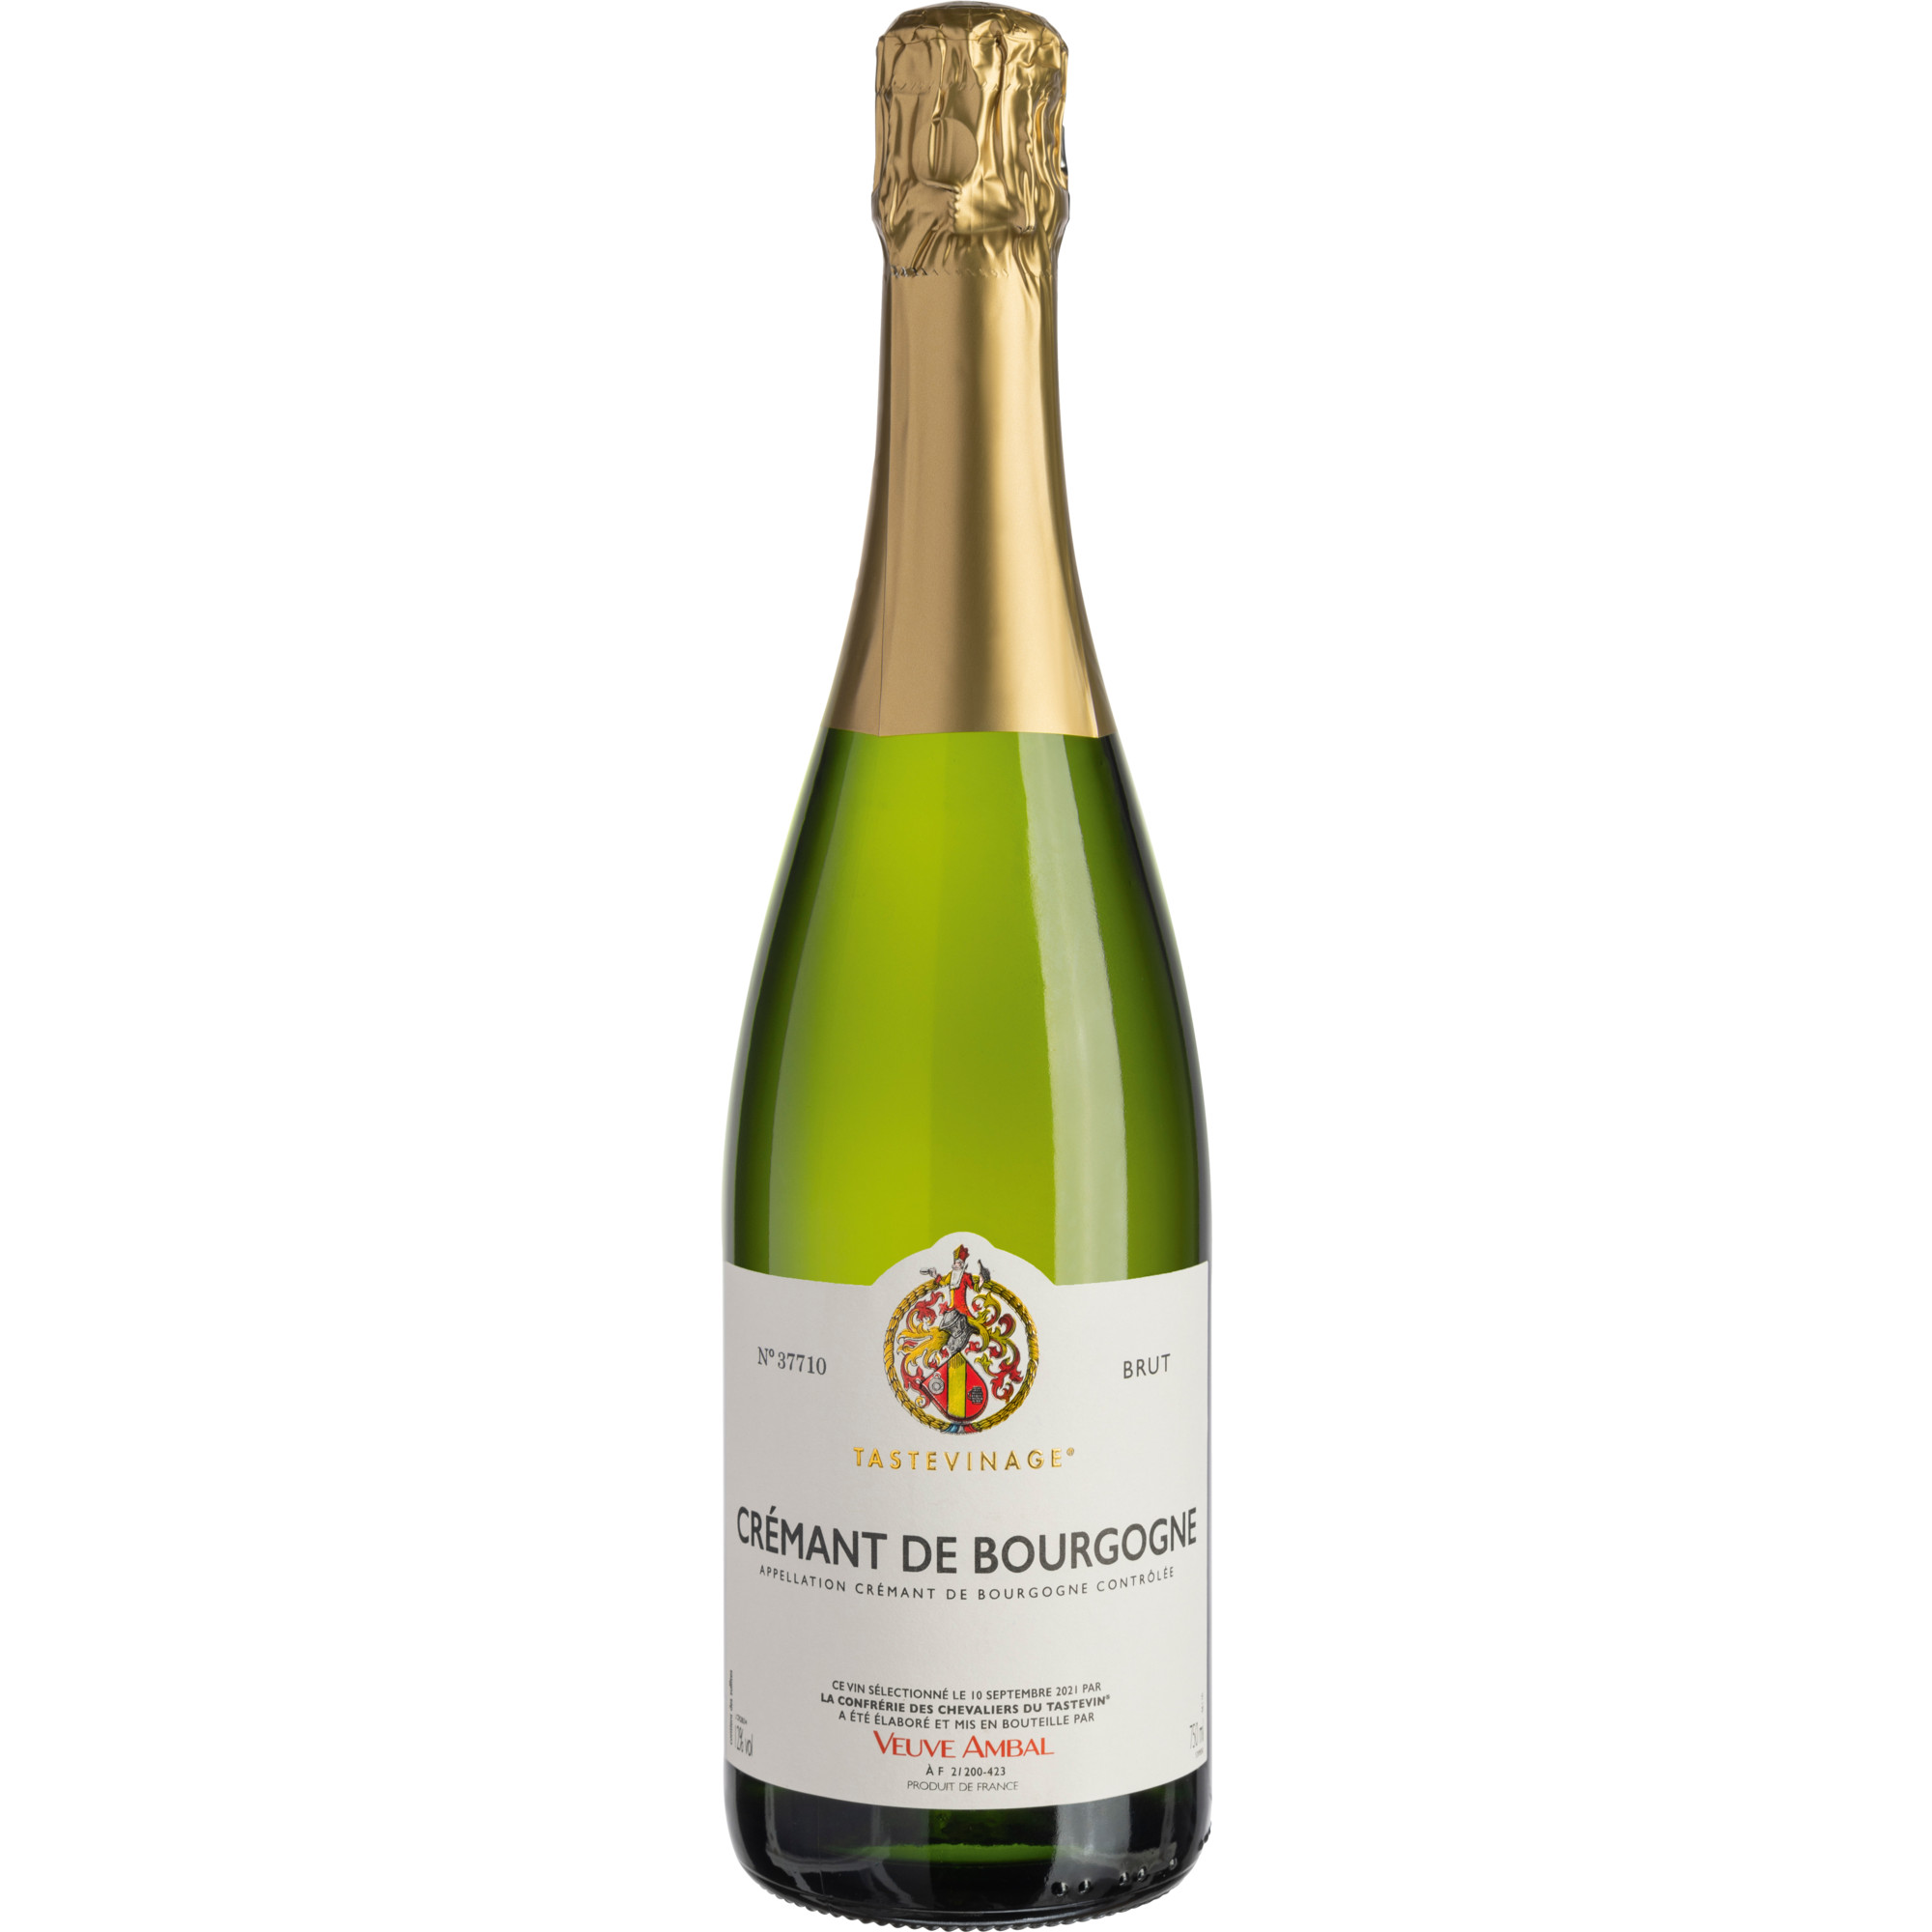 Tastevinage Veuve Ambal Crémant de Bourgogne, Brut, Crémant de Bourgogne AC, Burgund, Schaumwein